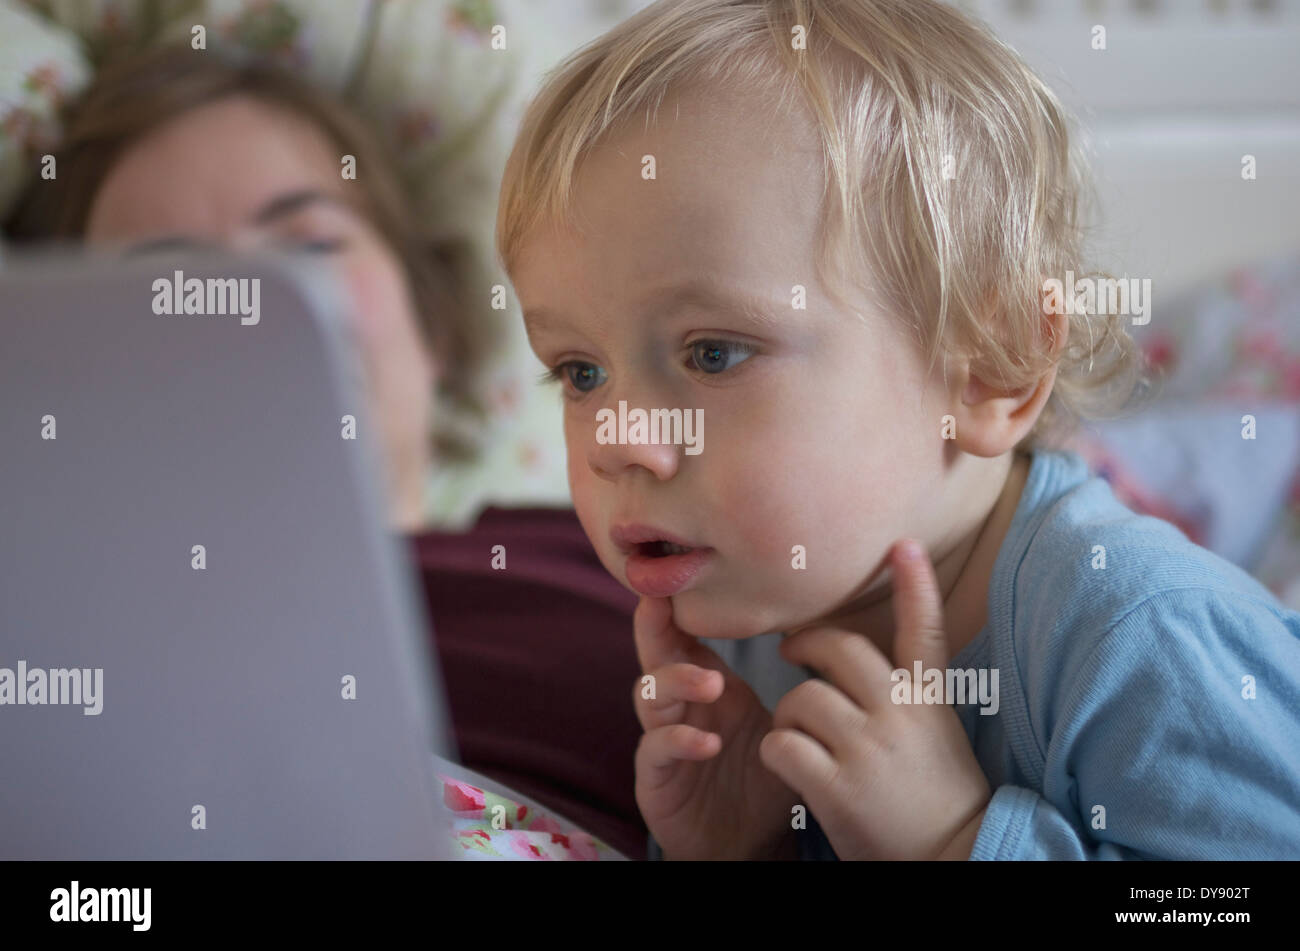 Toddler looking at digital tablet Stock Photo